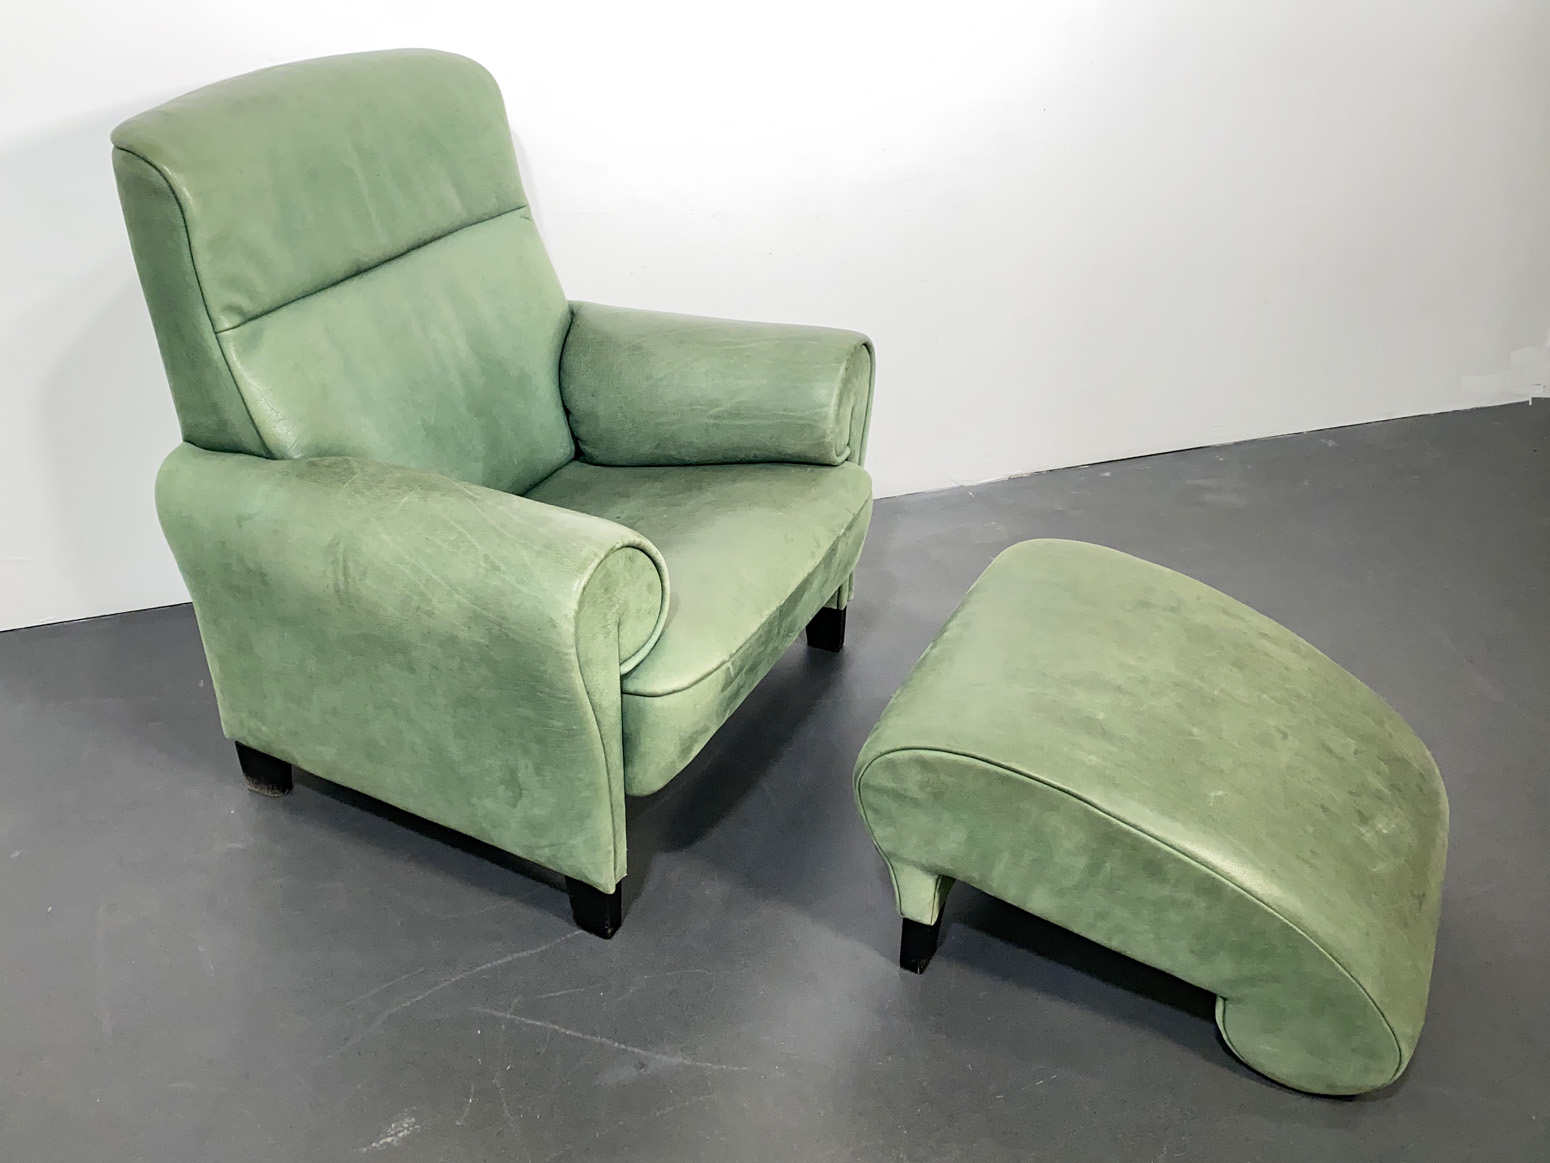 De Sede Armchair, Lounge Chair with Ottoman DS-90, green Leather, by Anita Schmidt for De Sede, Switzerland, 1992.